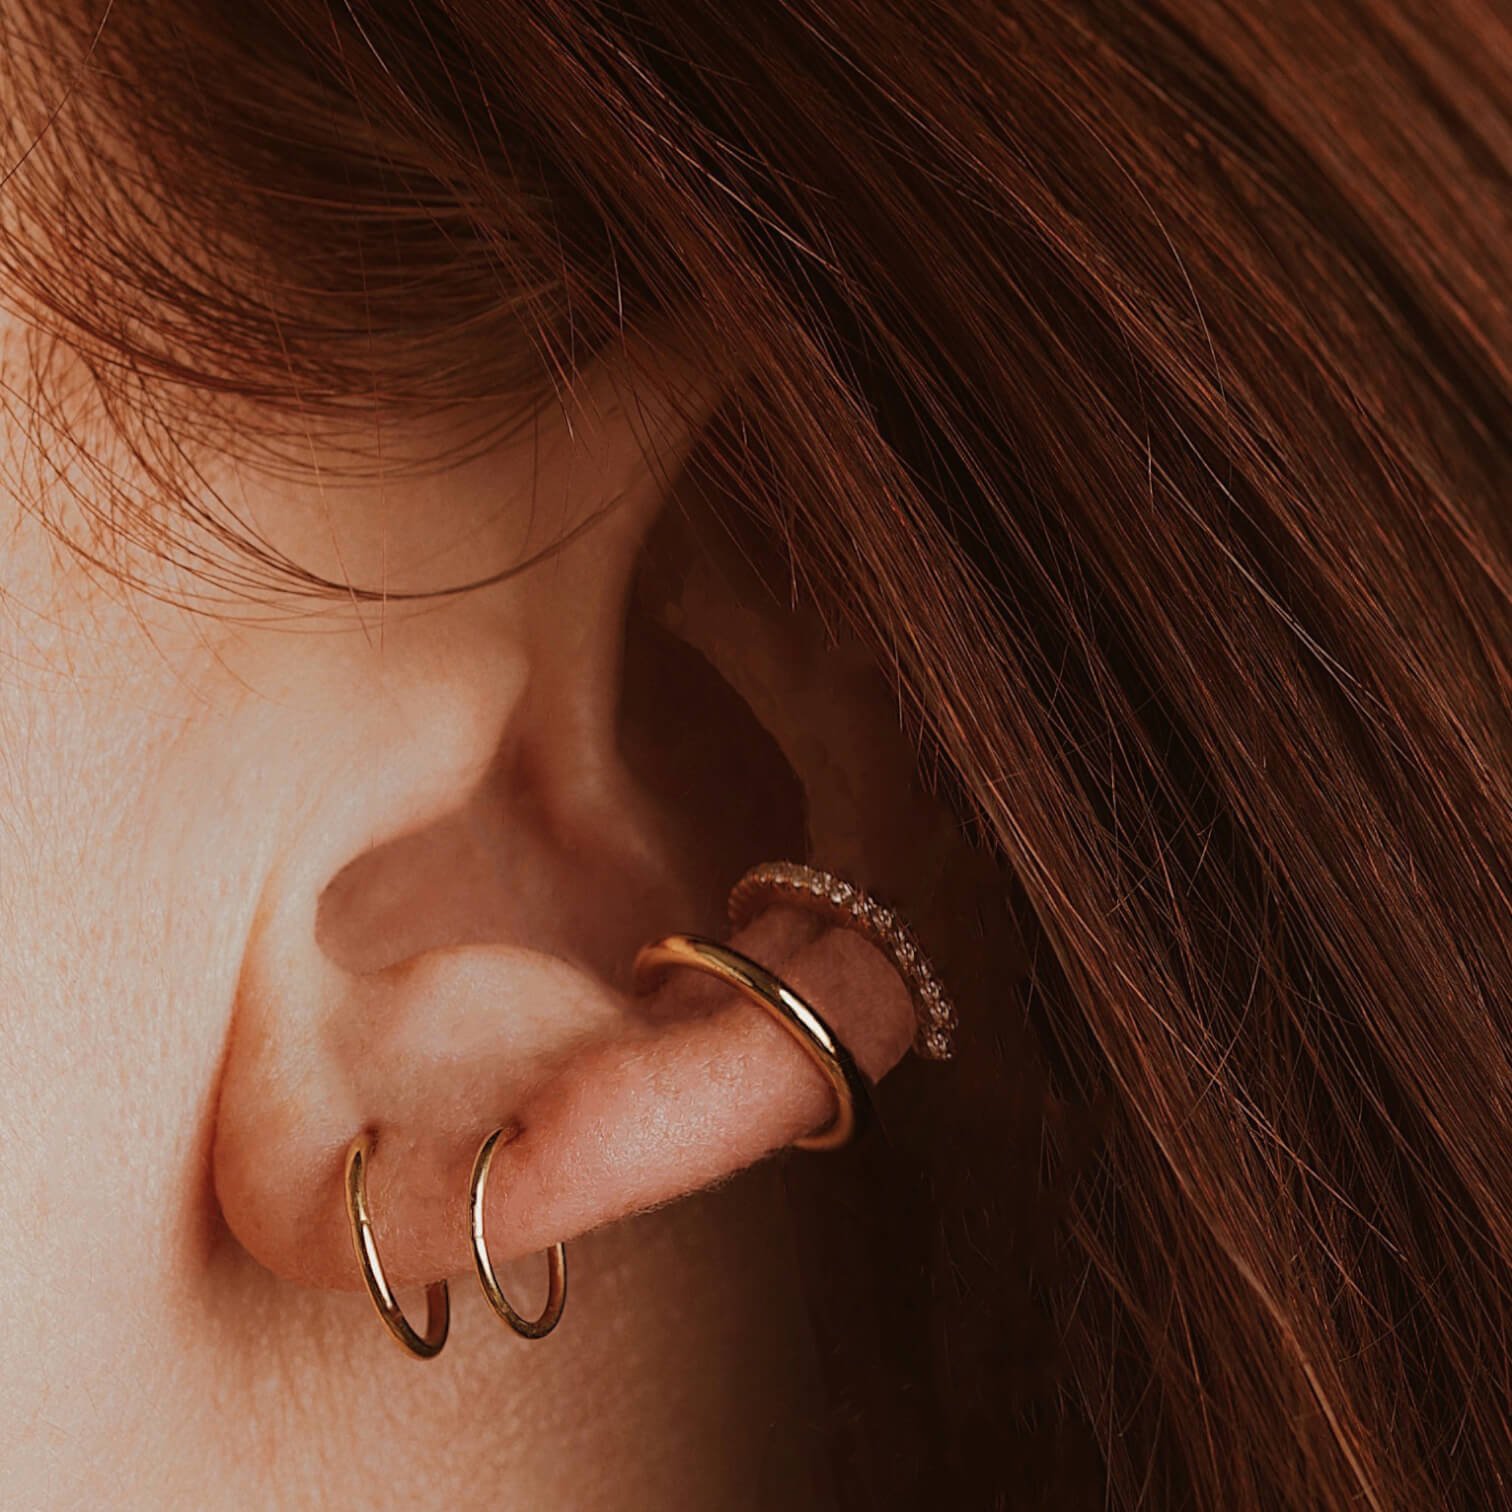 Nose Ring Ear Hoop Tragus Helix Cartilage Earrings Crystal Stainless Steel xl